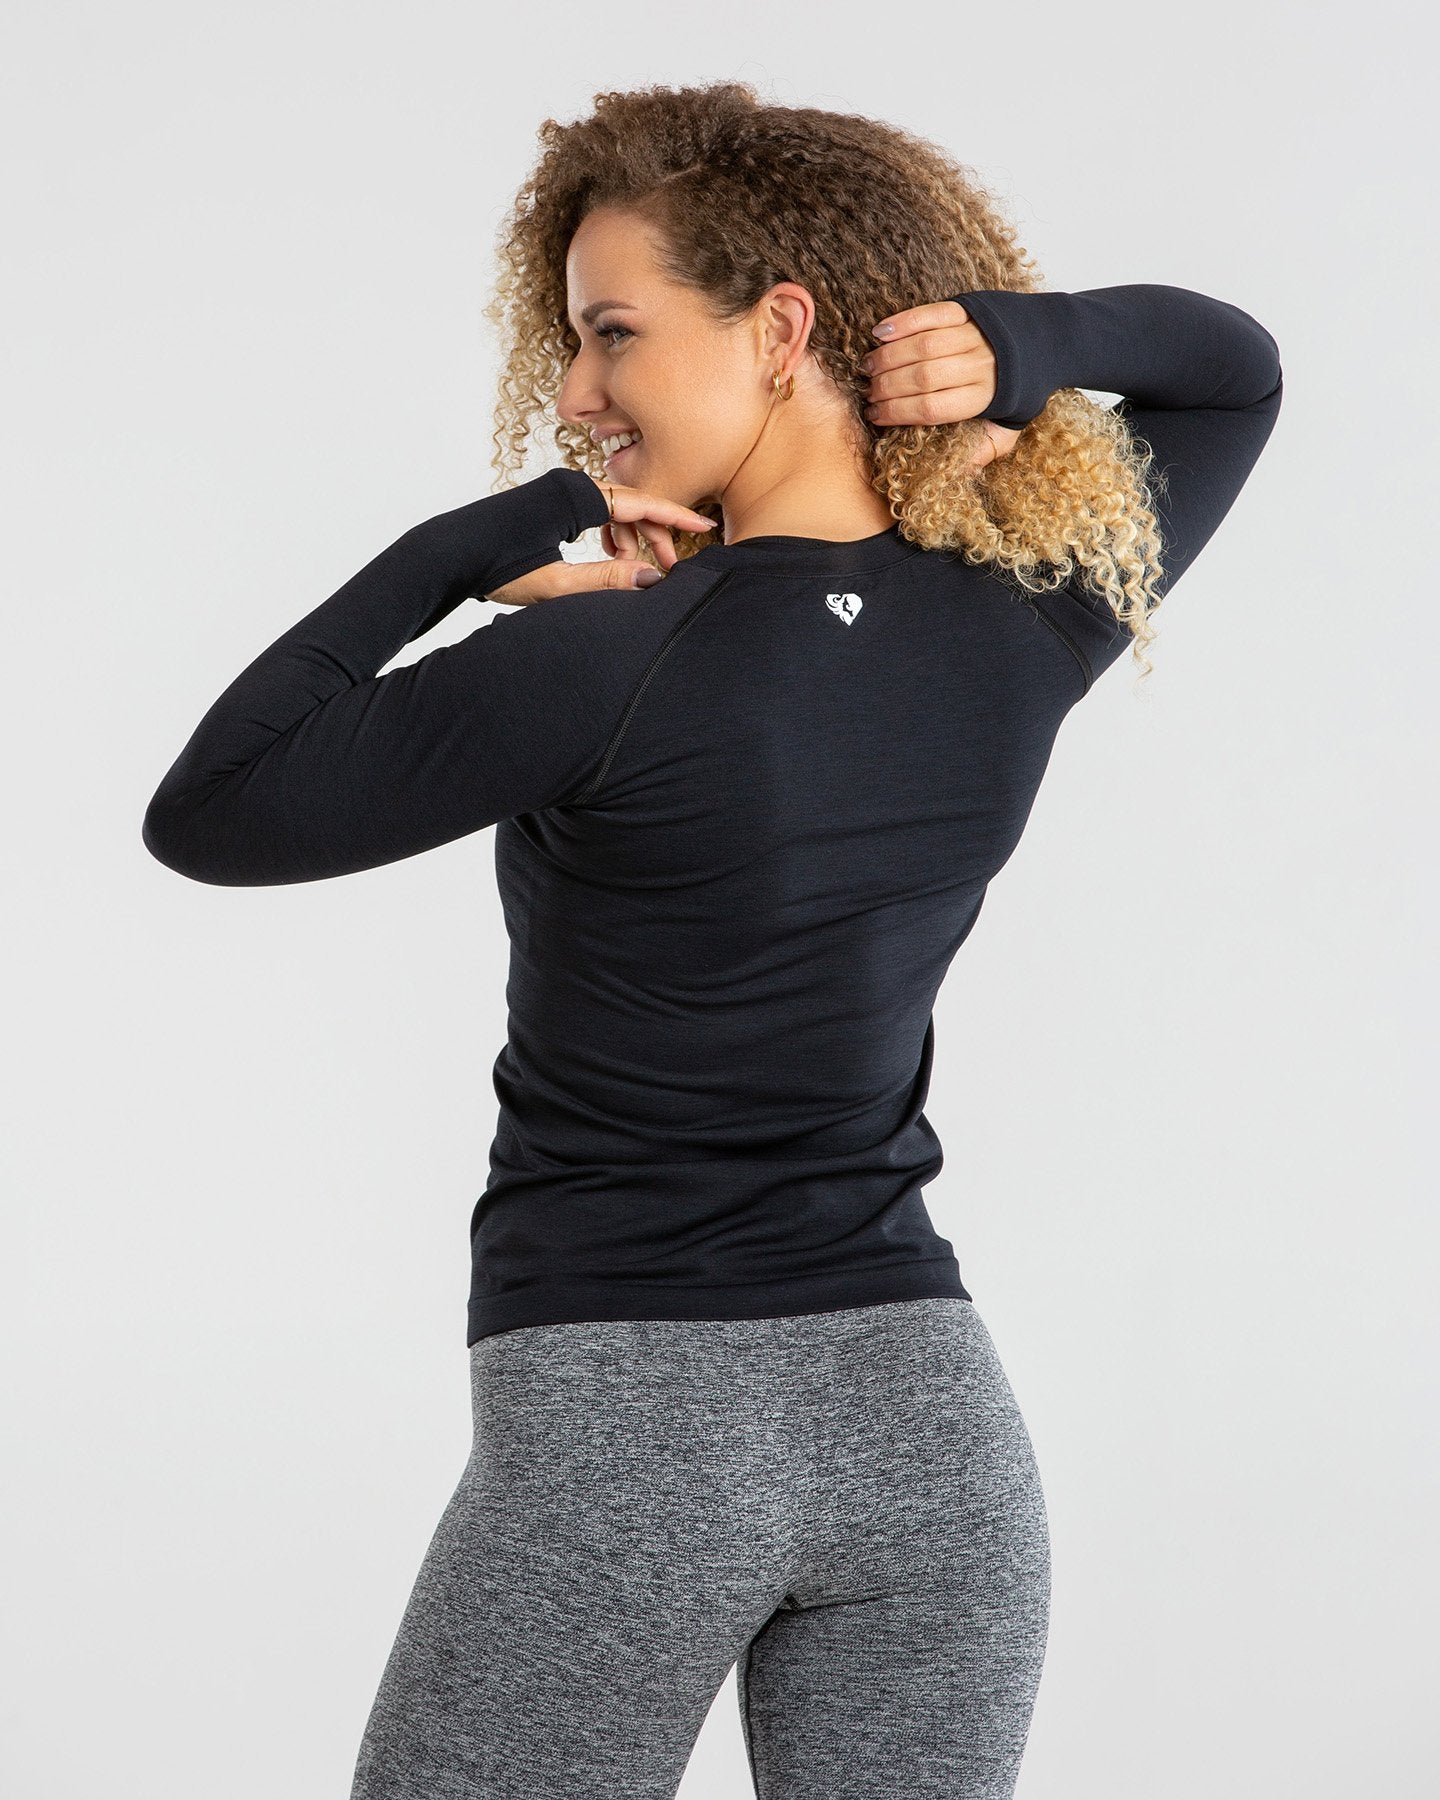 Vertical Stripe Joggers for Women - Sporty Chimp legging, workout gear &  more